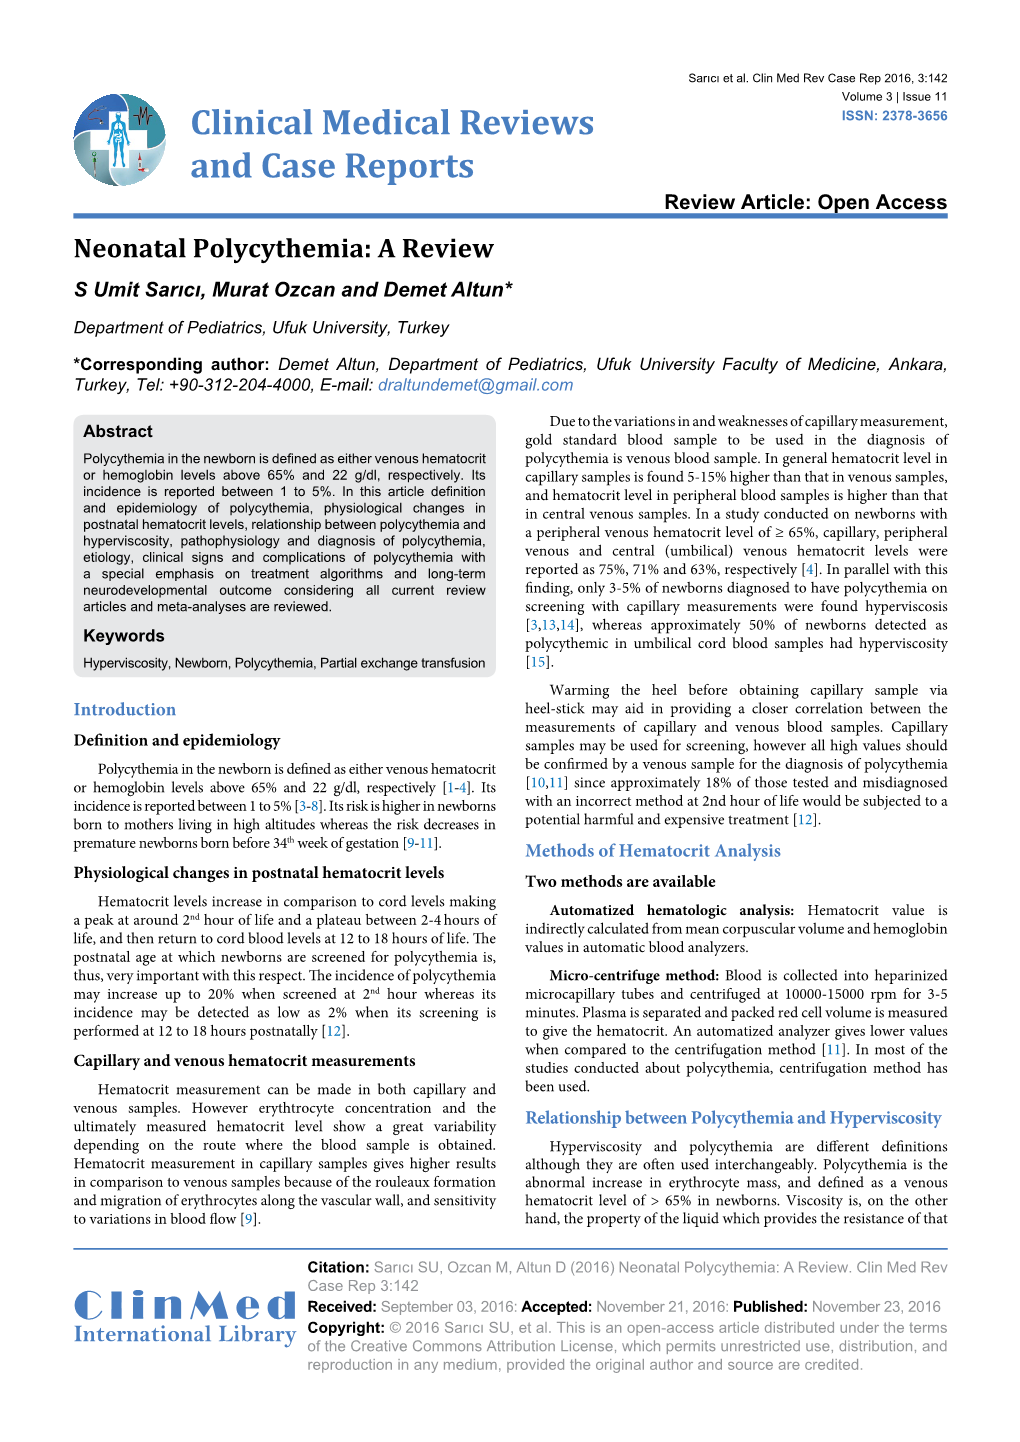 Neonatal Polycythemia: a Review S Umit Sarıcı, Murat Ozcan and Demet Altun*